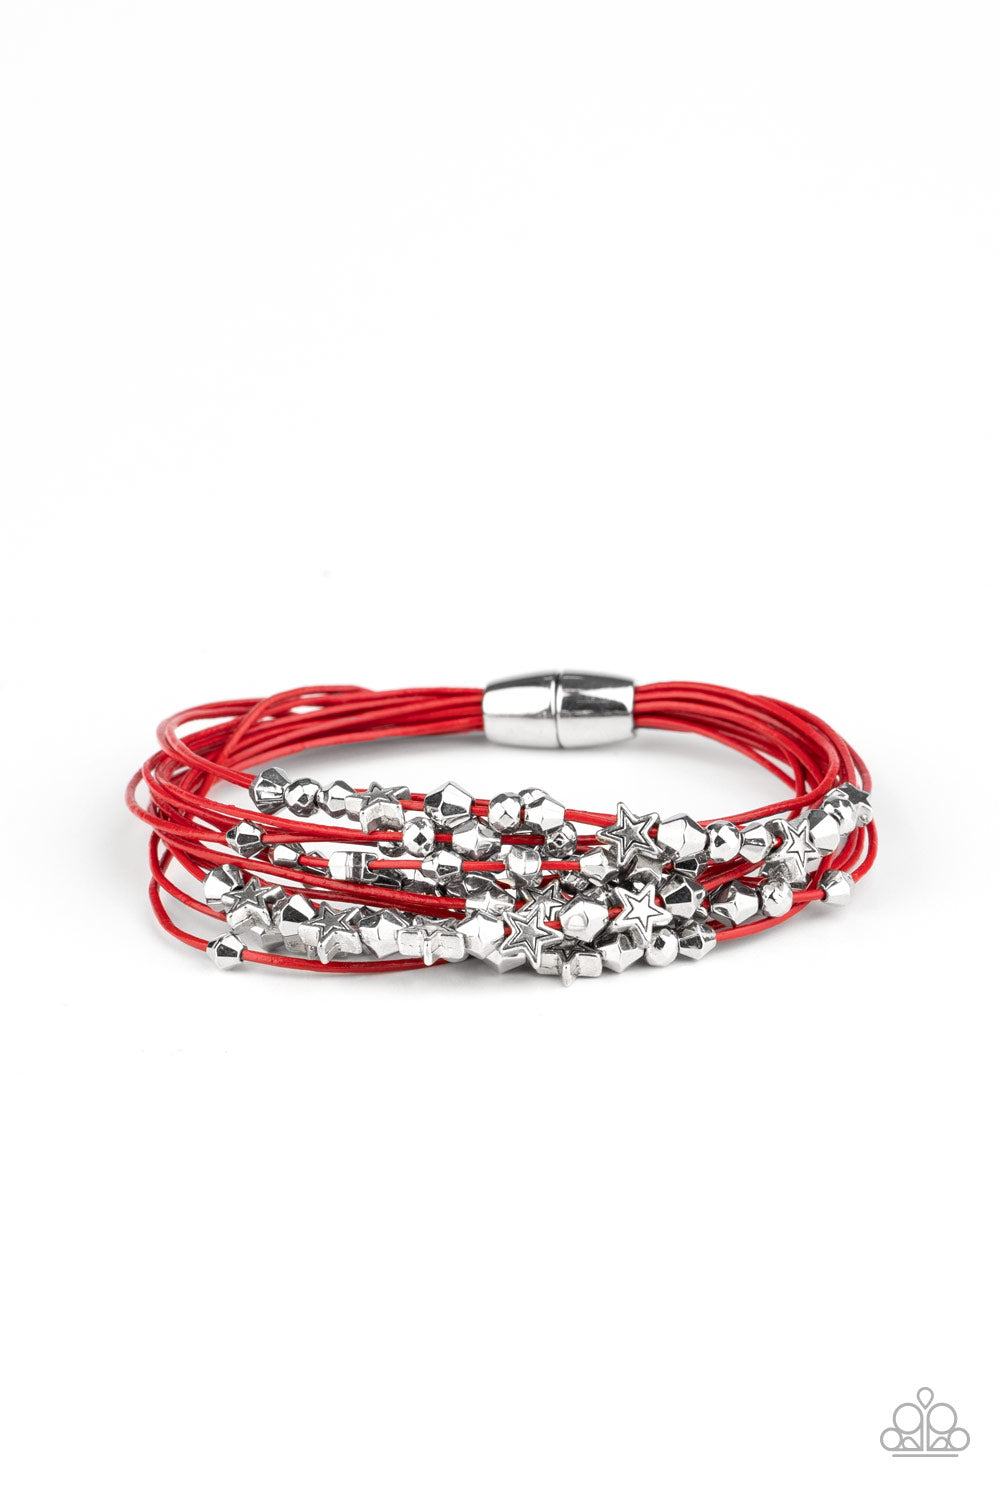 Star-Studded Affair - Red Bracelet freeshipping - JewLz4u Gemstone Gallery